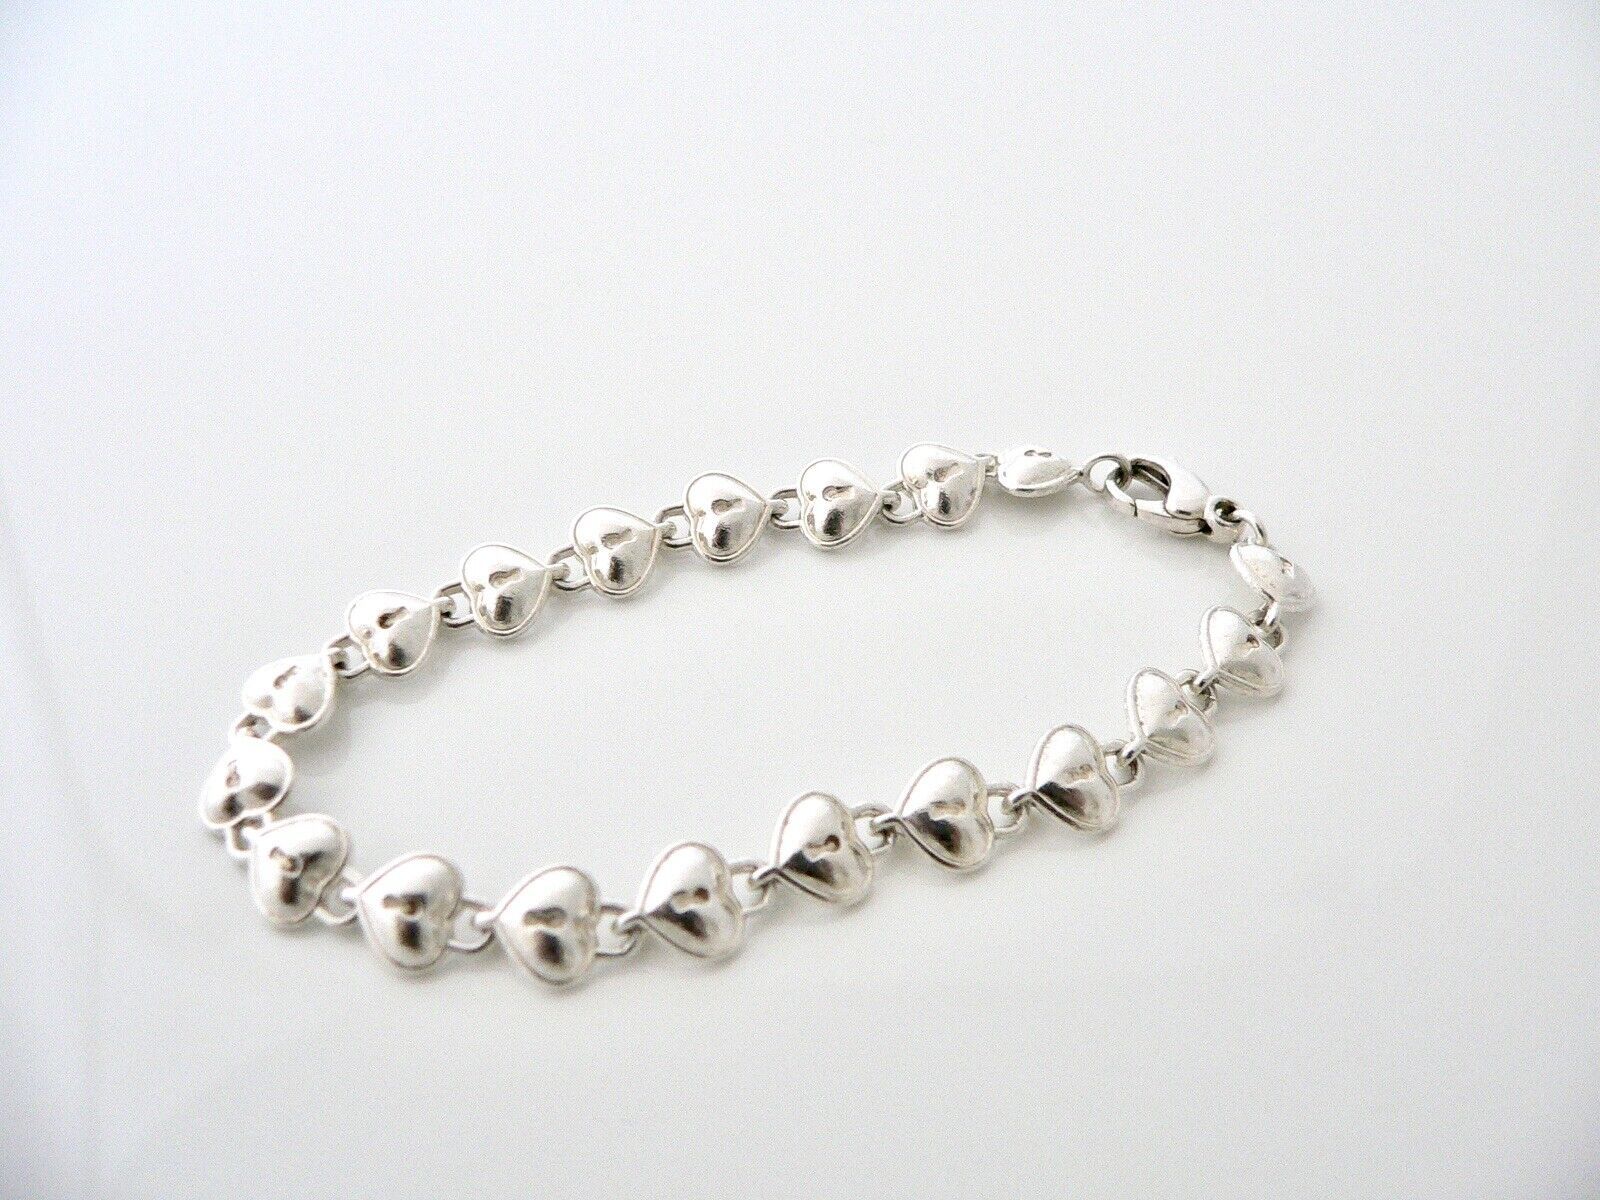 Tiffany & Co Heart Key Hole Link Links Bracelet Bangle Chain Silver 7.5 Inch Art - $448.00